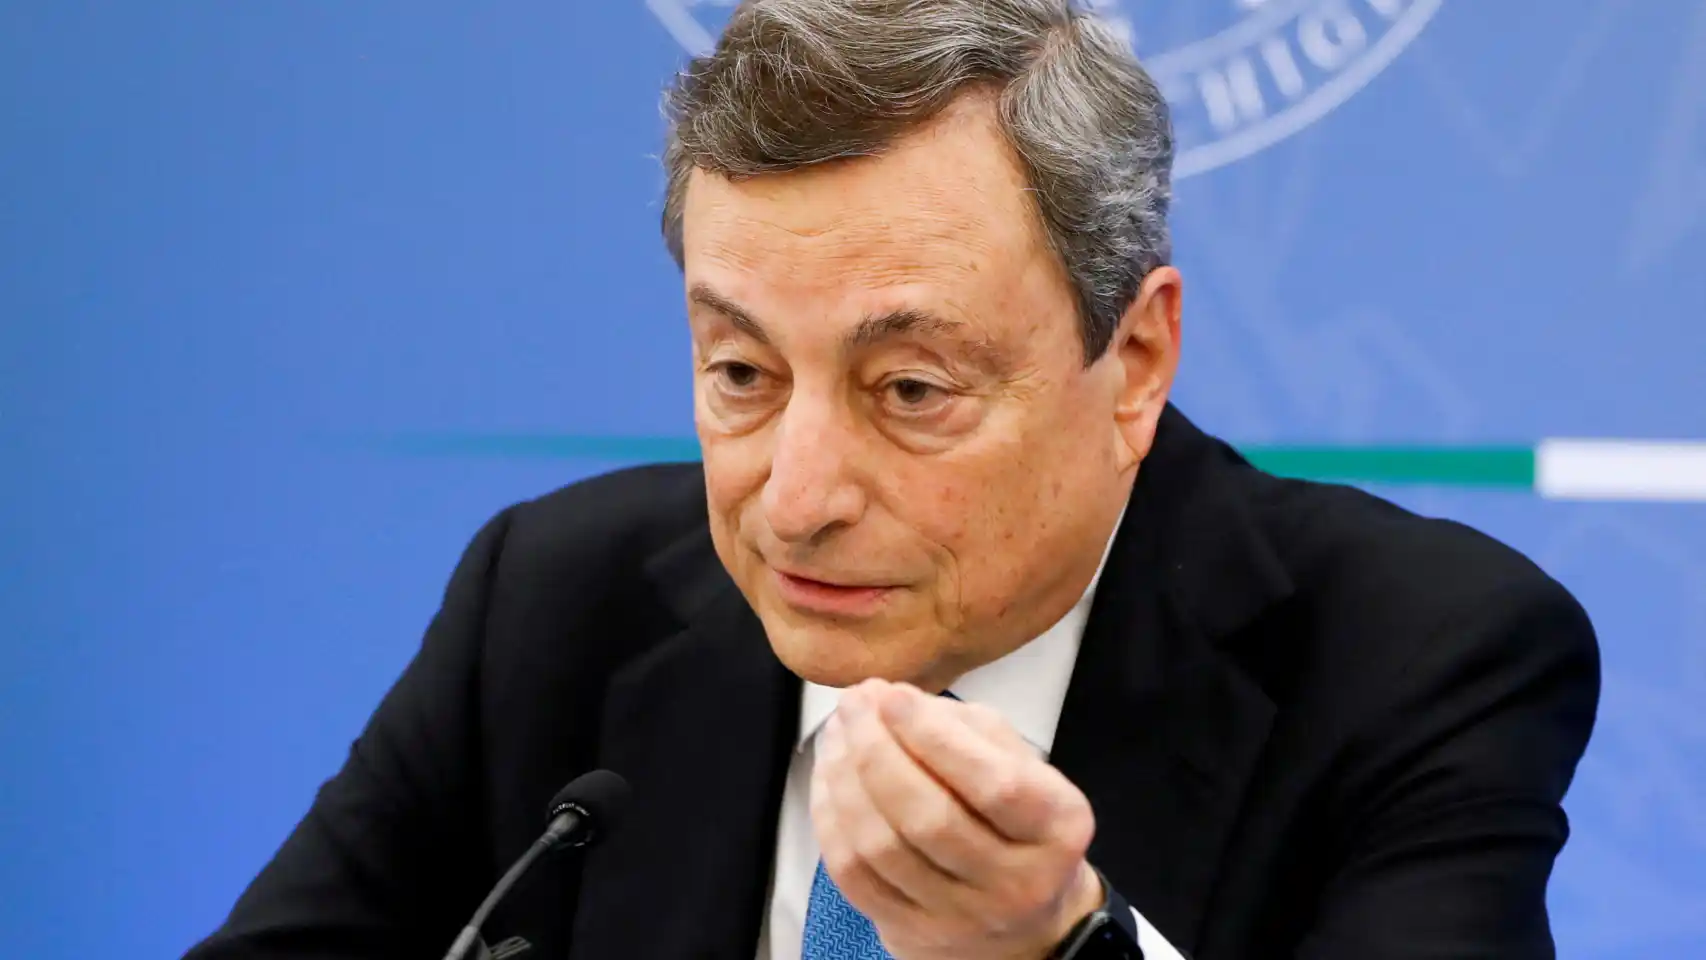 Mario Draghi dimitió como primer ministro de Italia